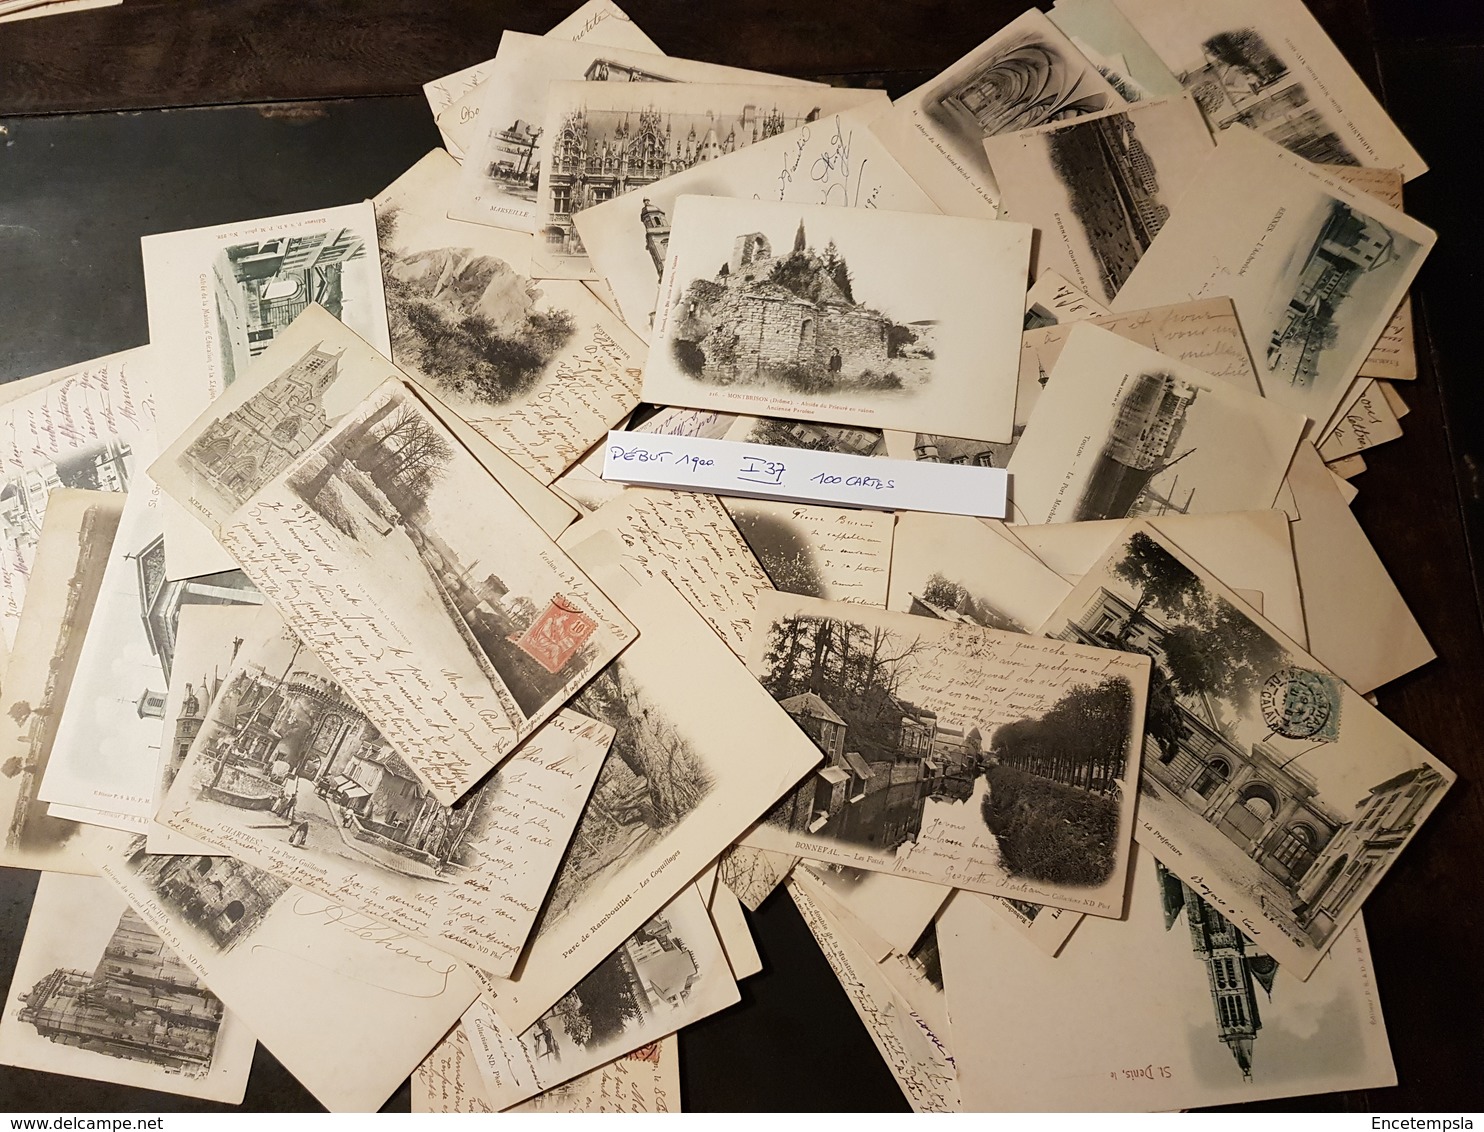 CPA - Carte postale - Lot de 100 cartes postales - France - Début 1900 ( Lot I37 )